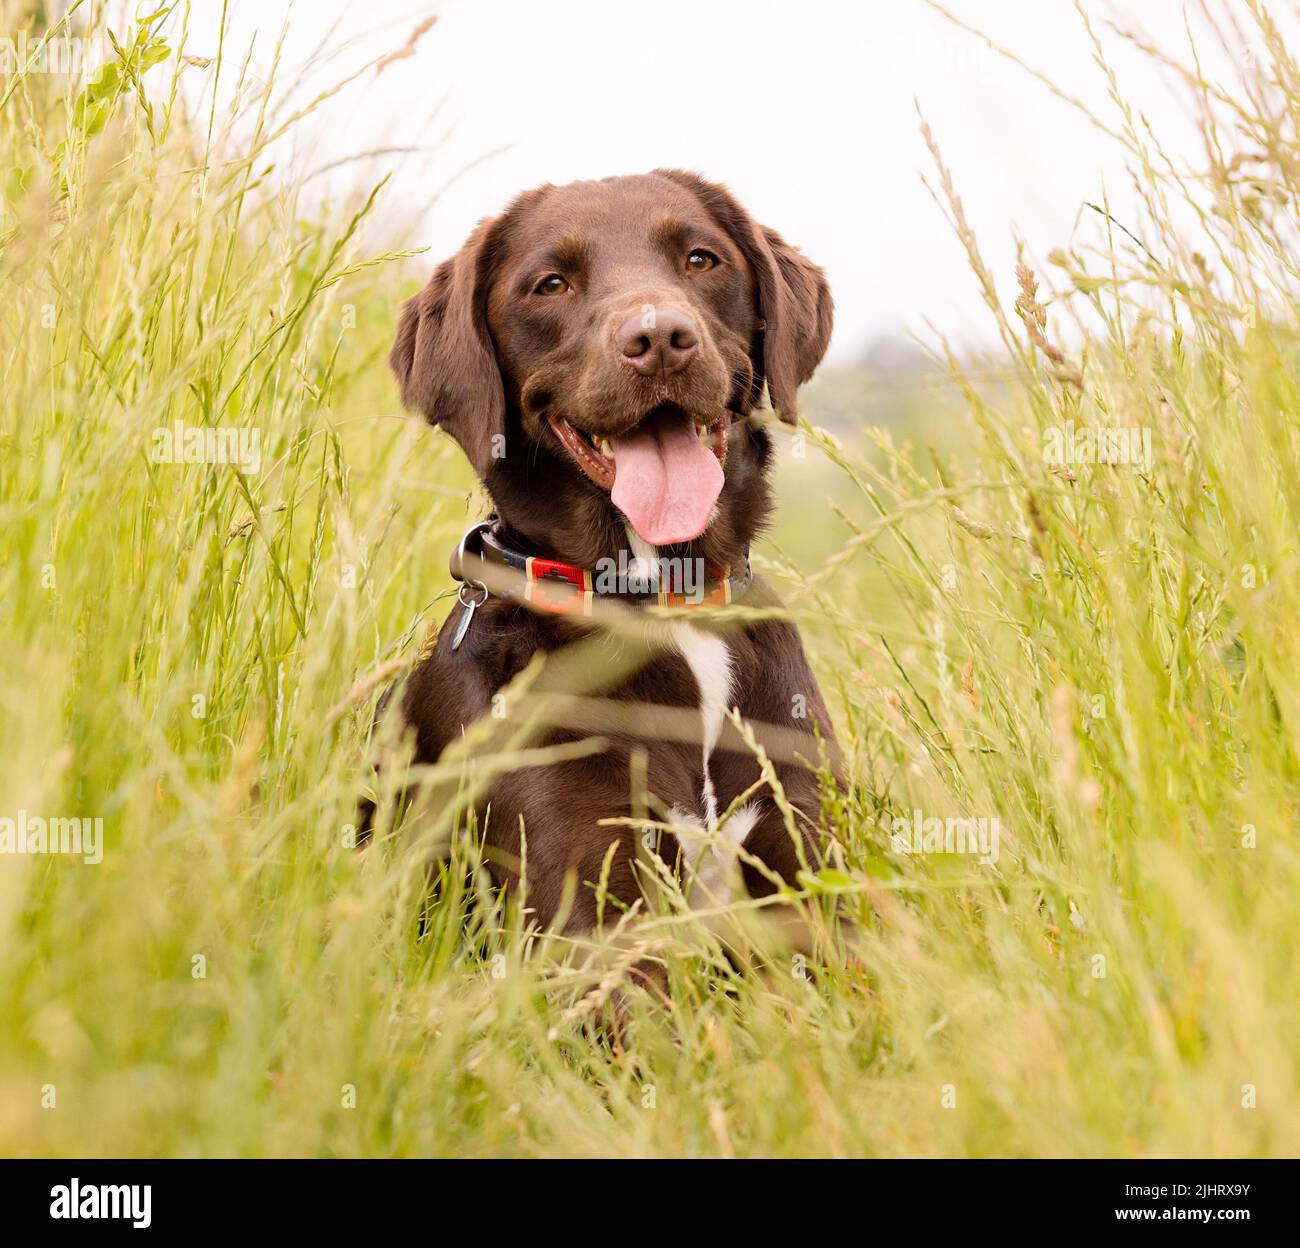 Chocolate Labrador Springer Spaniel mixed breed dog called a Springador lying in a field of long grass. Stock Photo